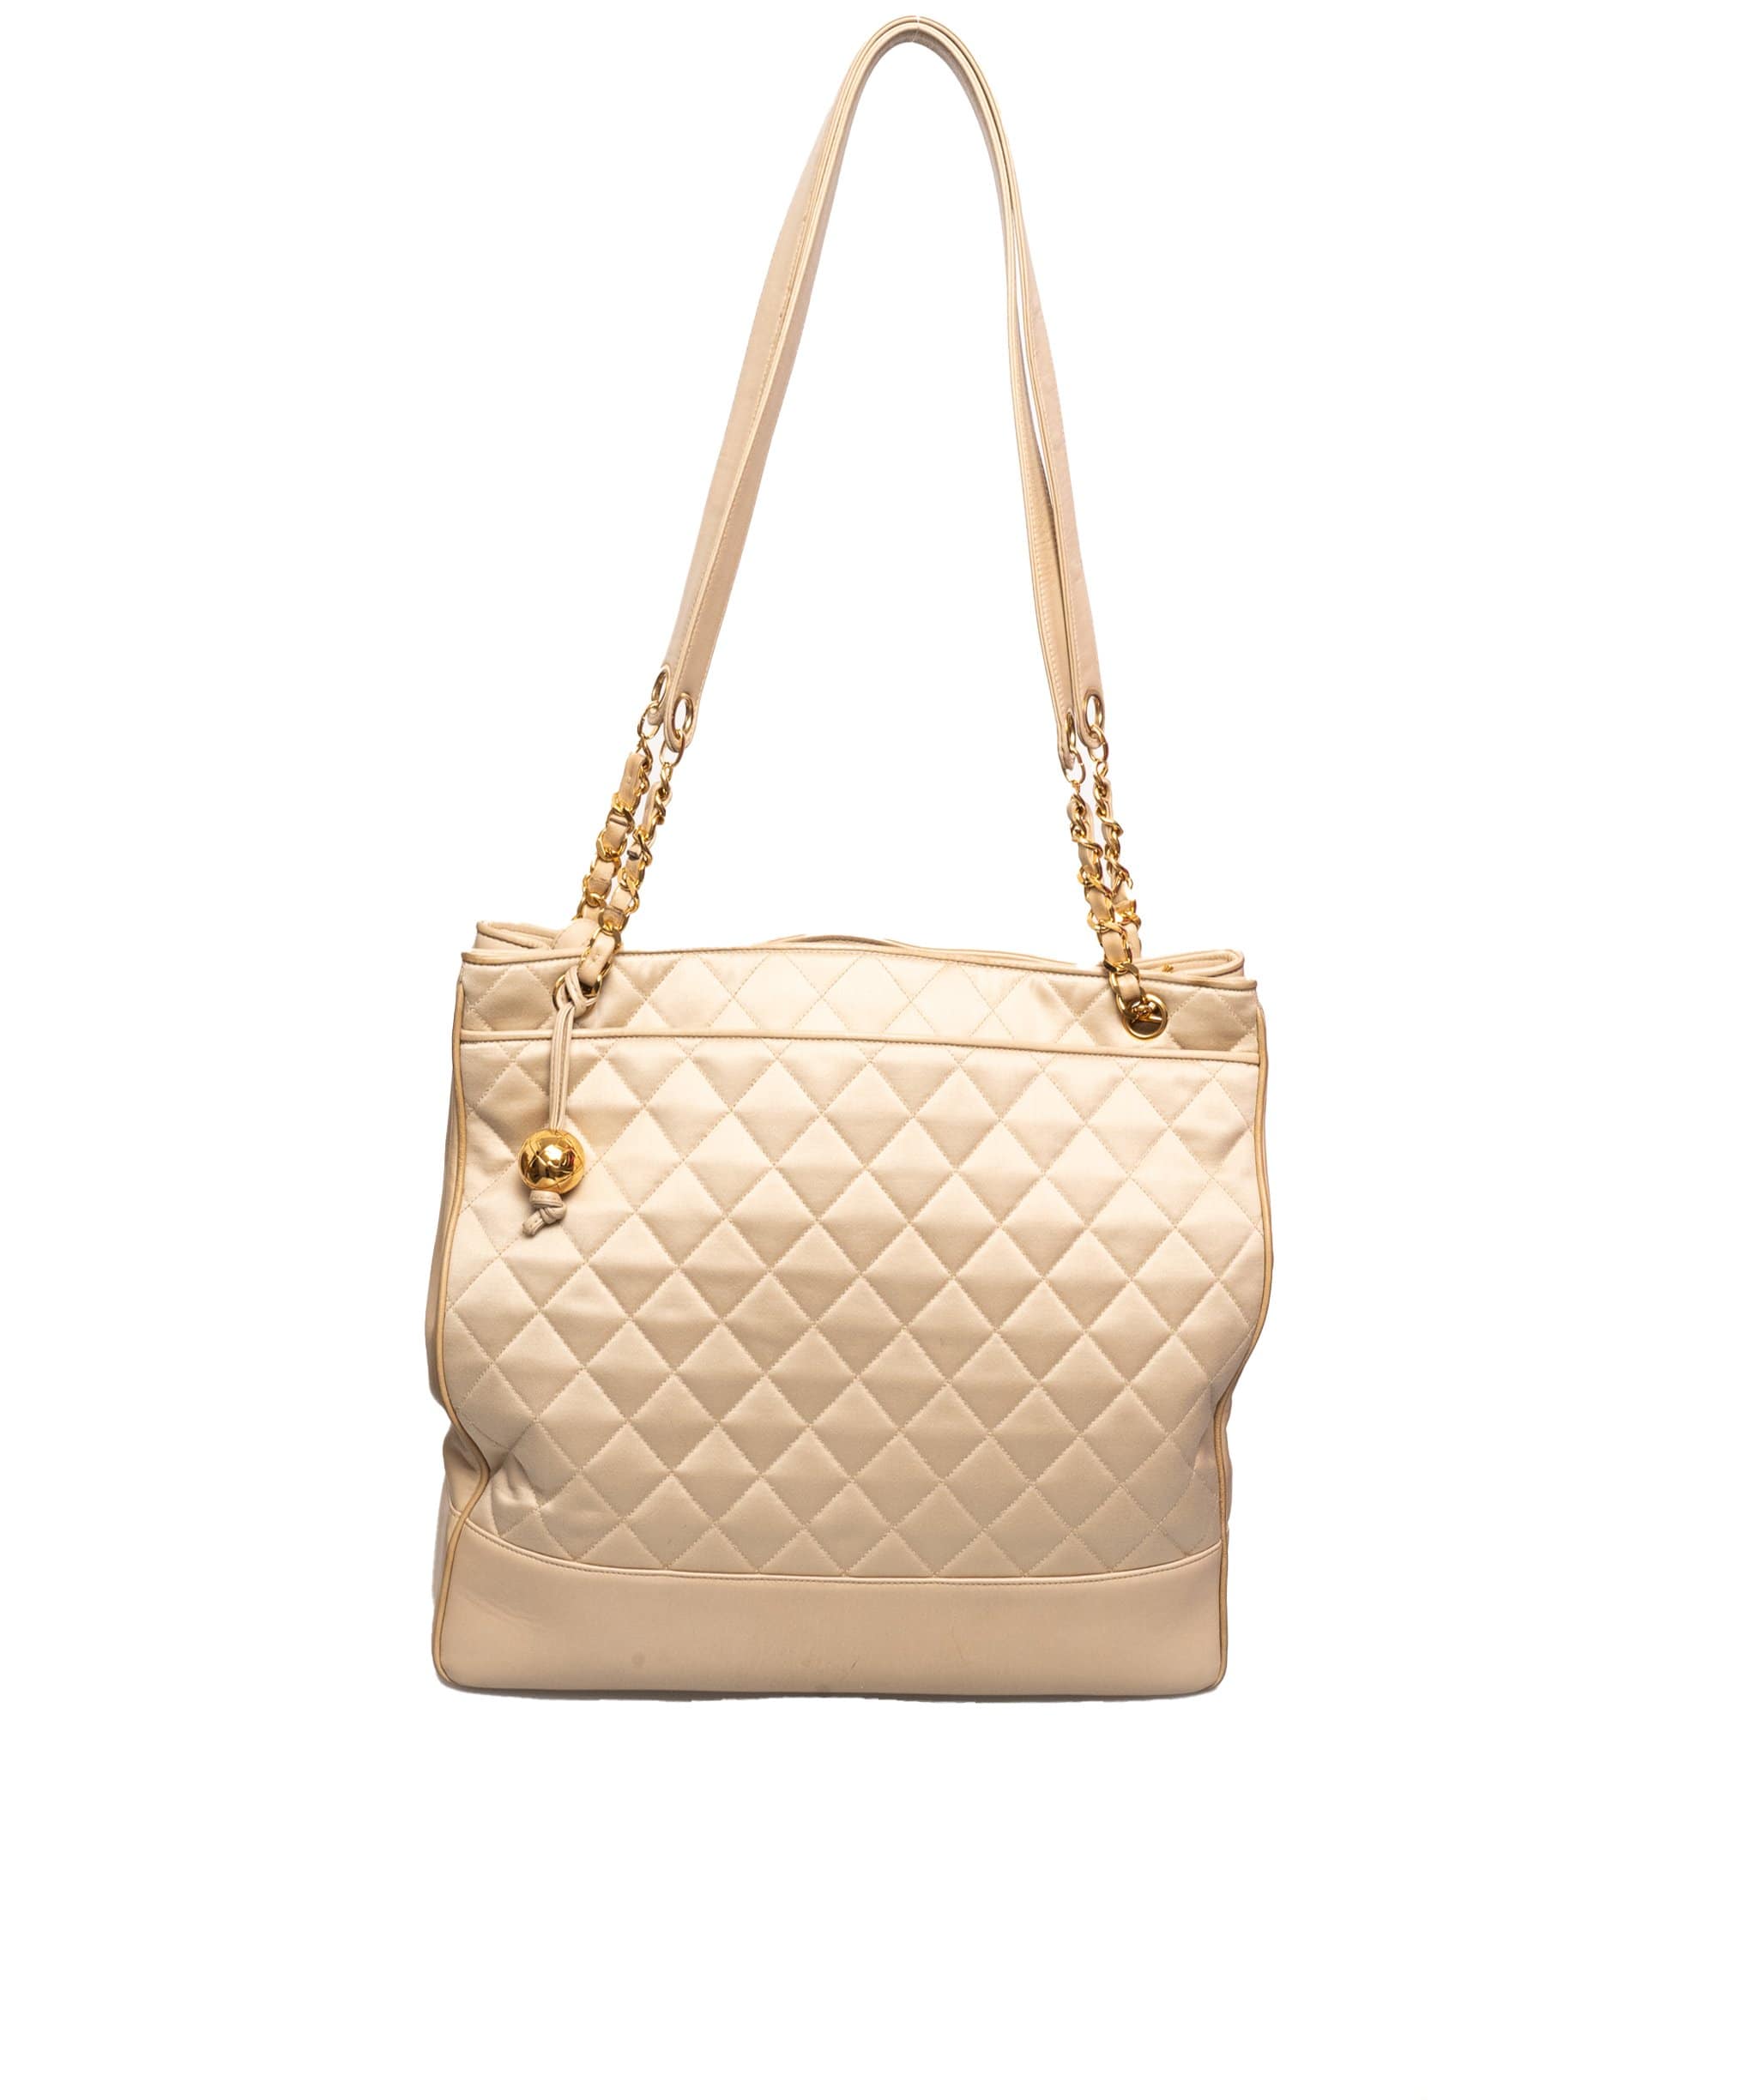 Chanel Chanel Cream Matelasse Leather Tote Bag  AWL1025